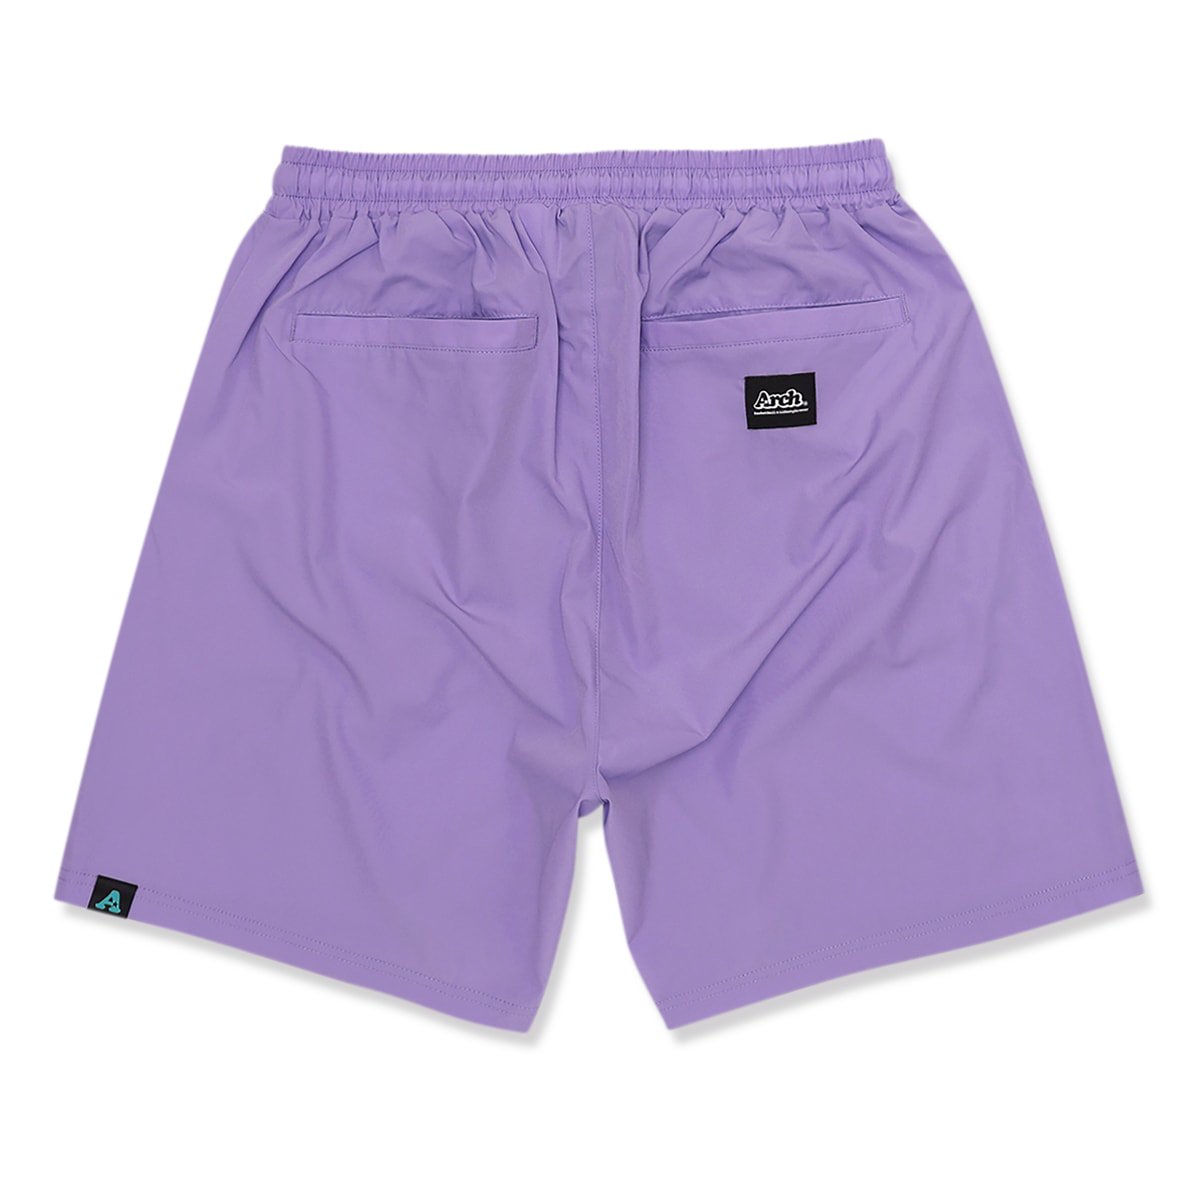 stretch nylon short pants【purple】 - Arch ☆ アーチ 